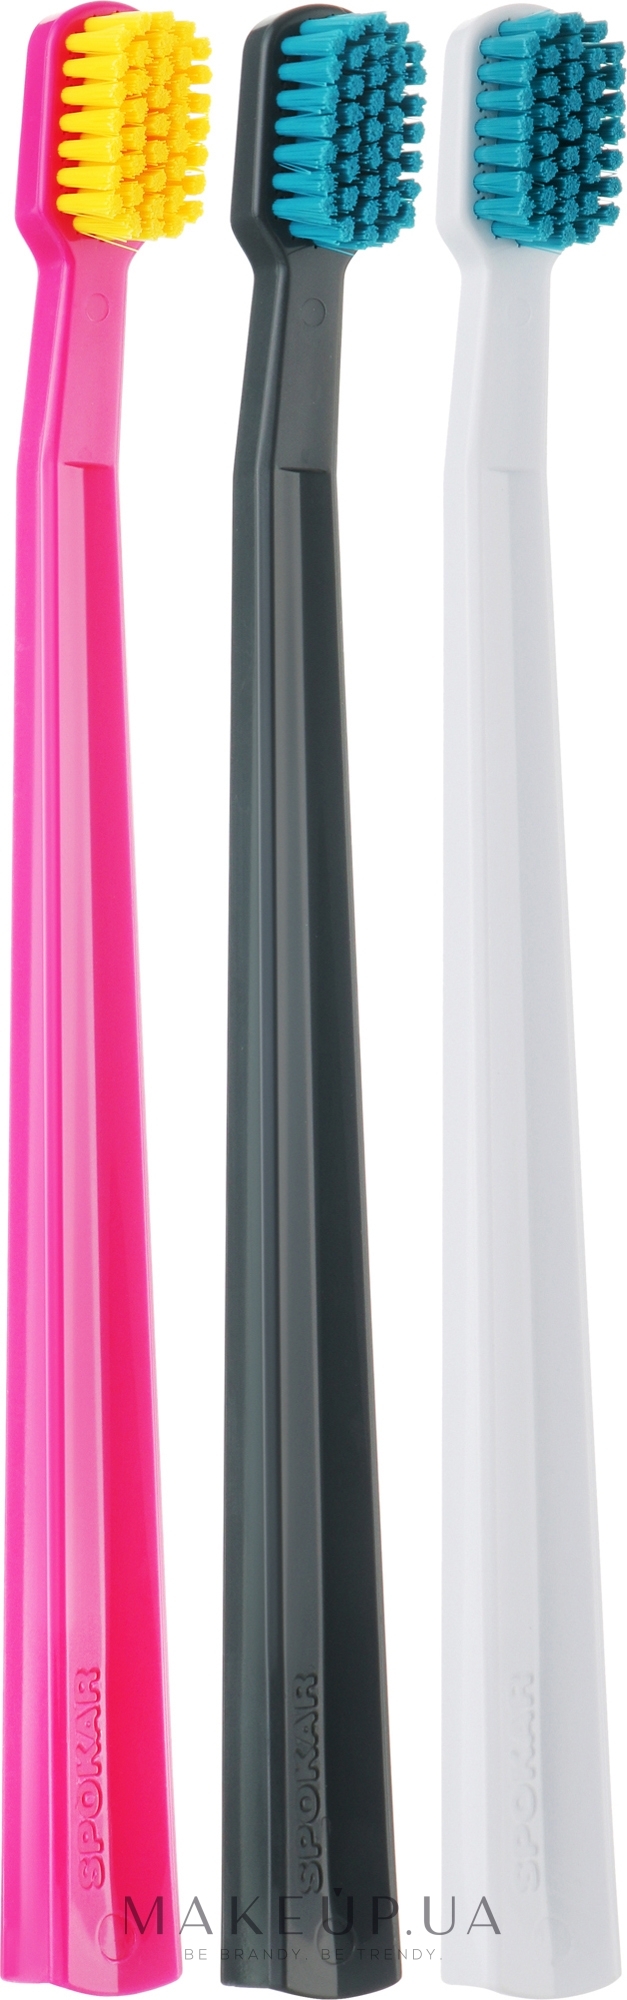 Набор зубных щеток "X", супермягких, черная + розовая + белая - Spokar X Supersoft — фото 3шт